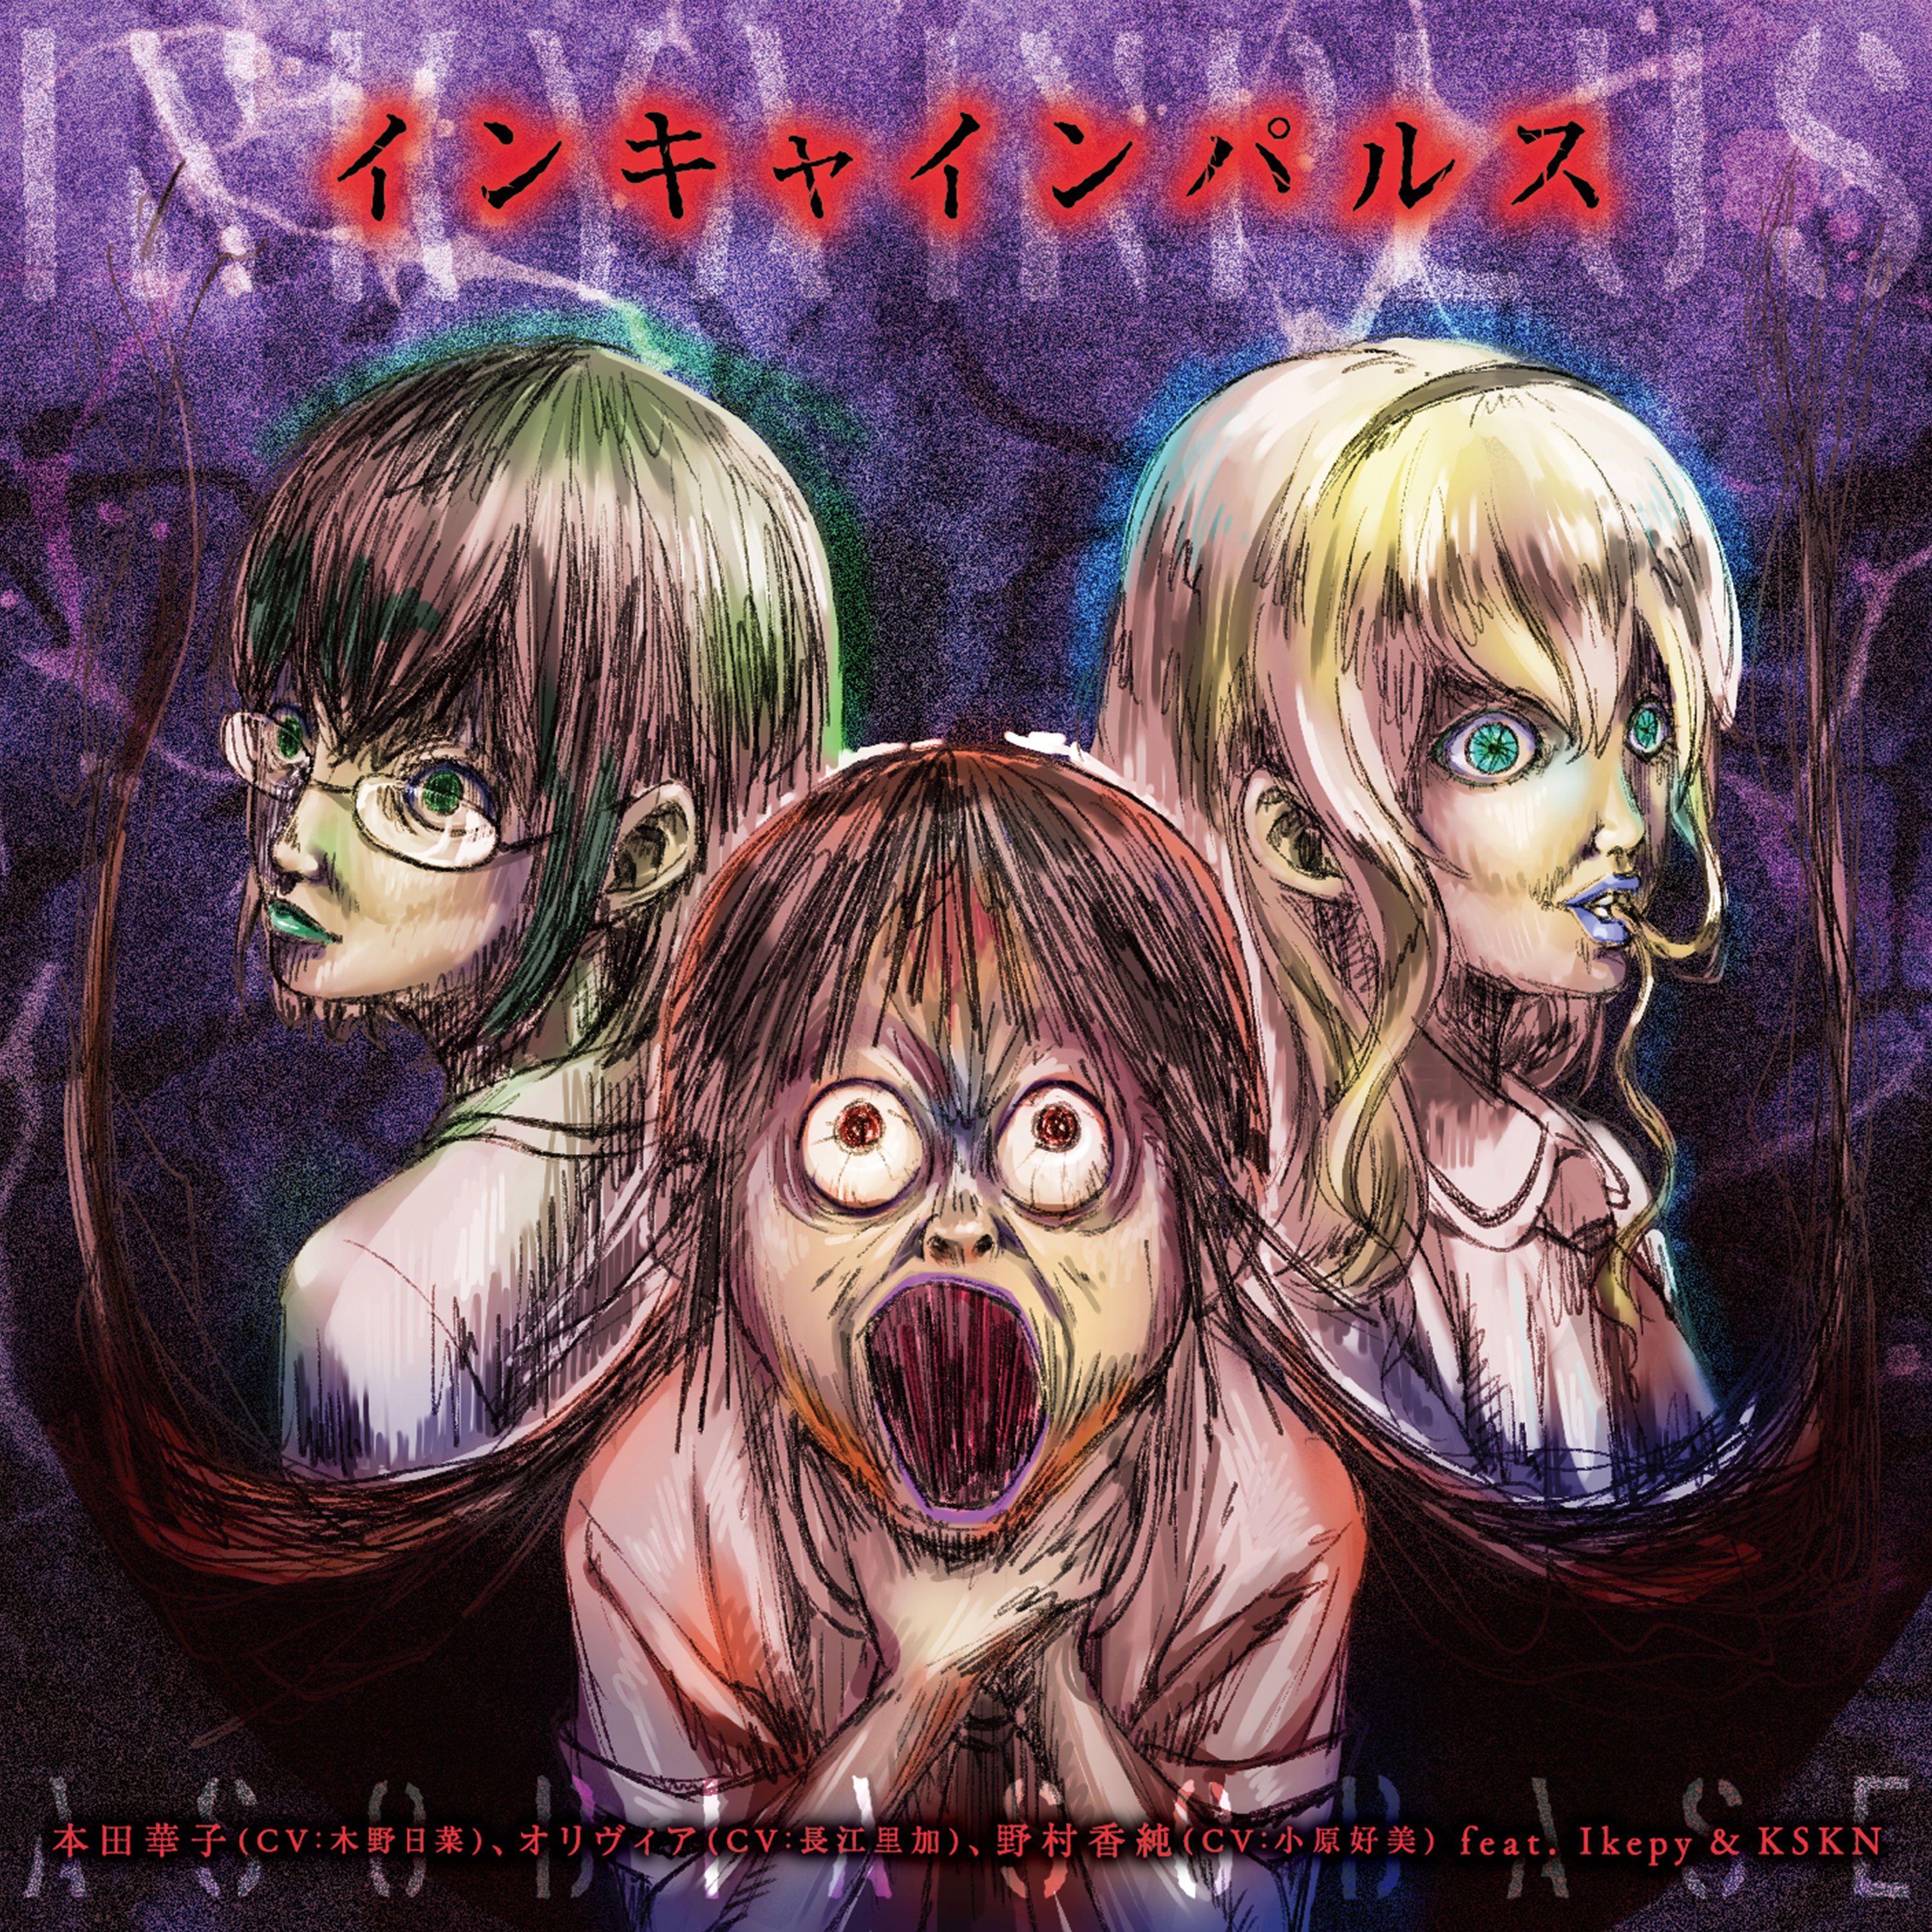 Kino Hina, Nagae Rika, & Kohara Konomi featuring Ikepy & KSKN — Inkya Impulse cover artwork